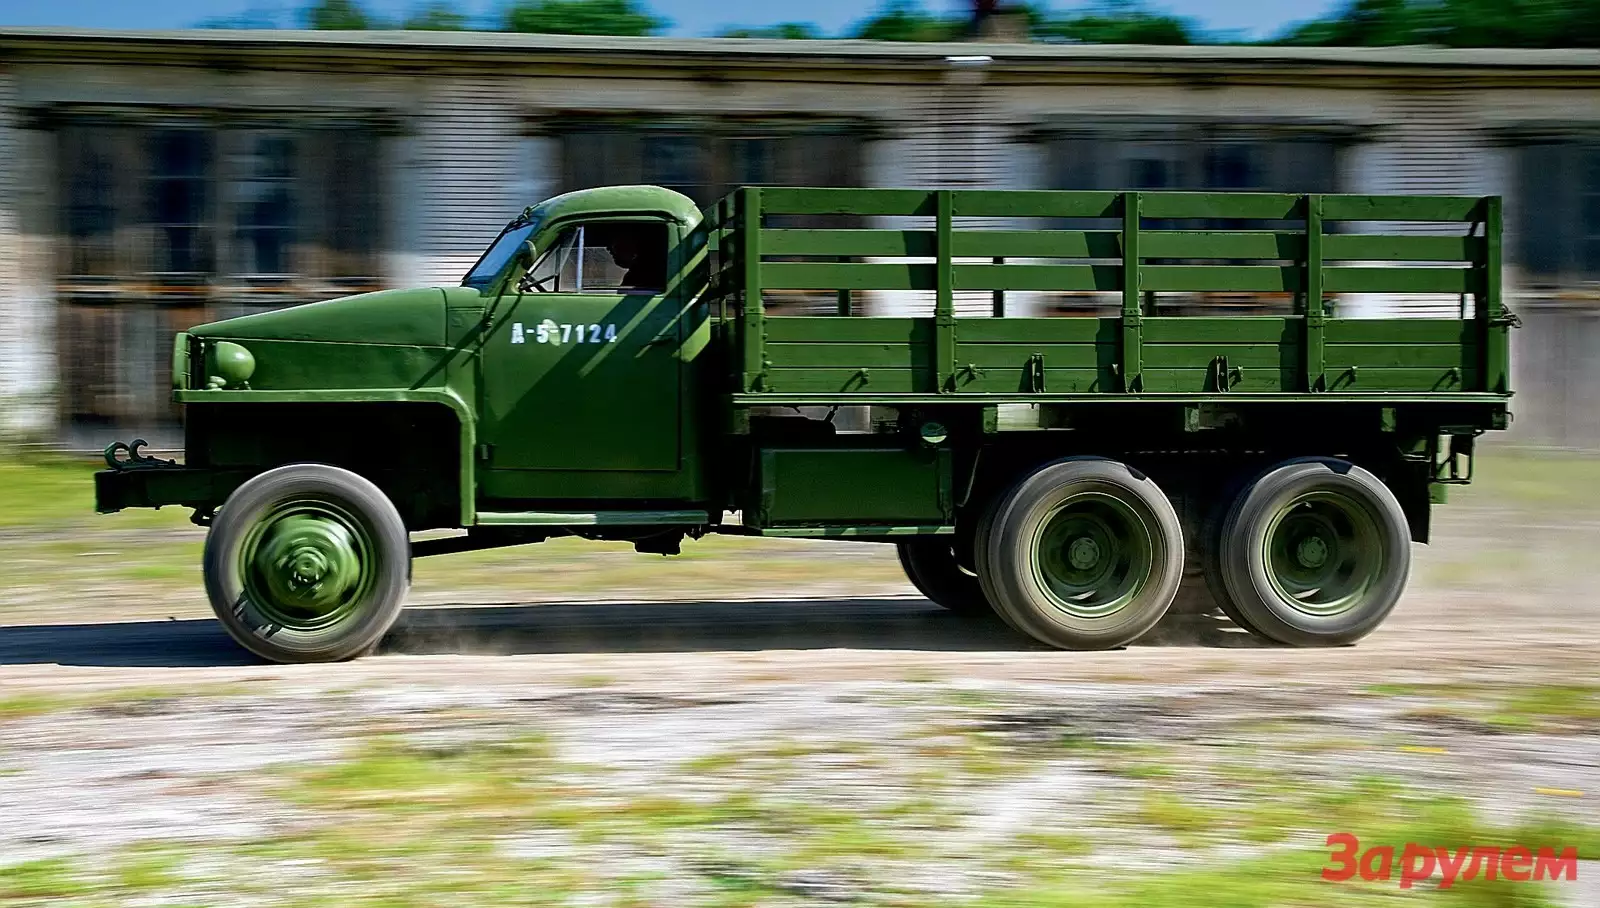 Студебеккер 1941-1945. Студебеккер us6. Грузовик Studebaker us6. Студебеккер автомобиль грузовой 1941.